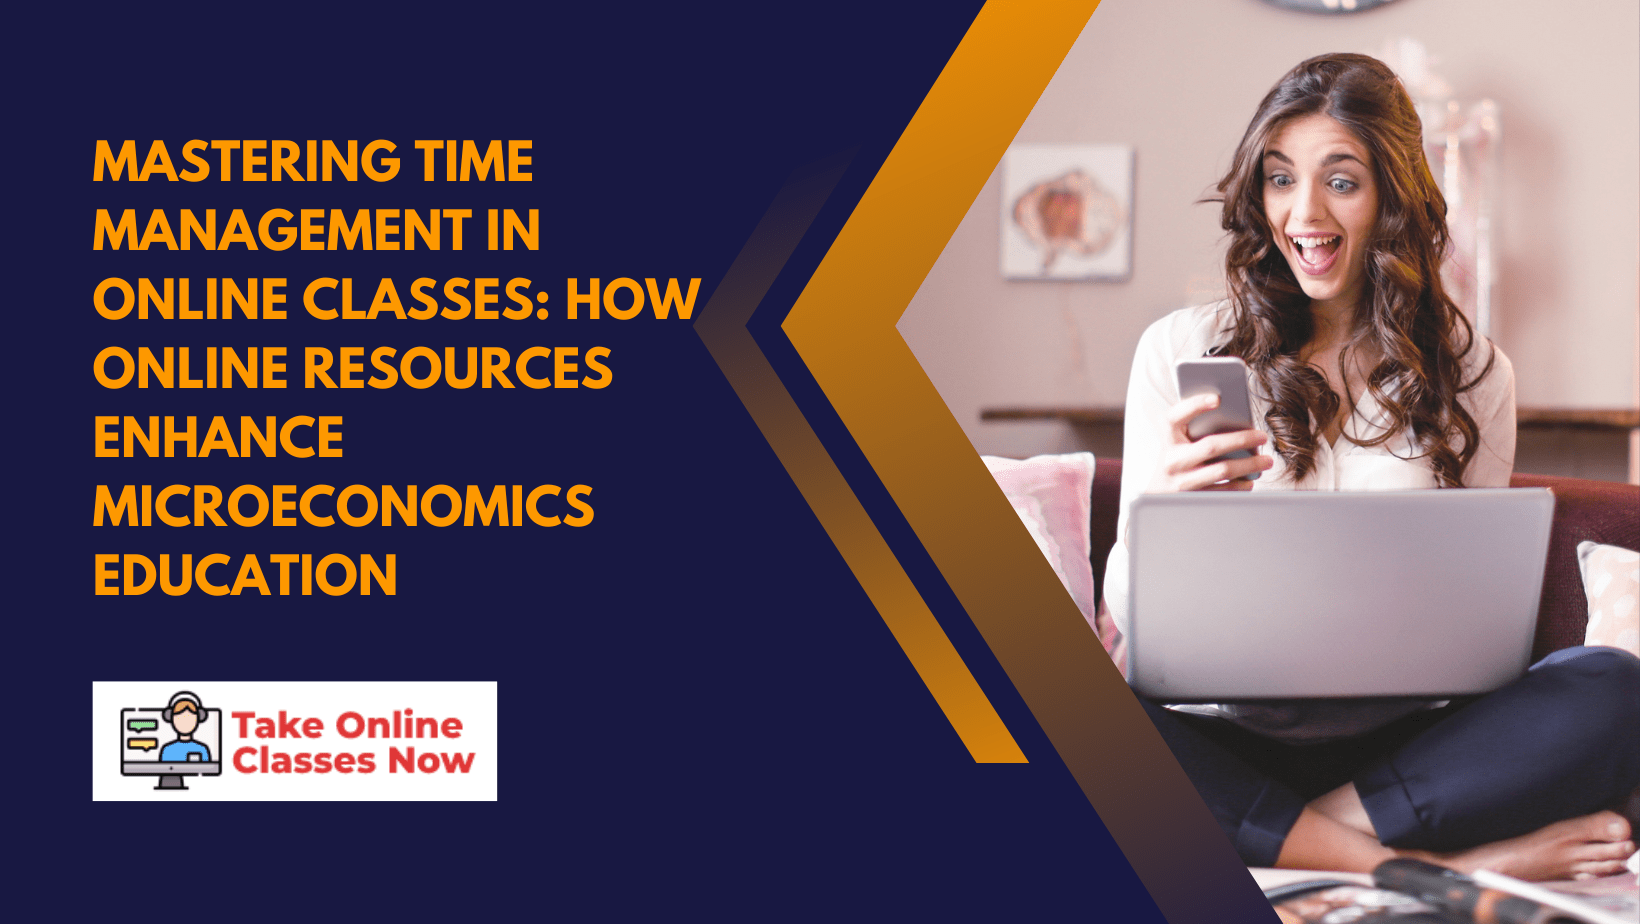 How Online Resources Enhance Microeconomics Education?